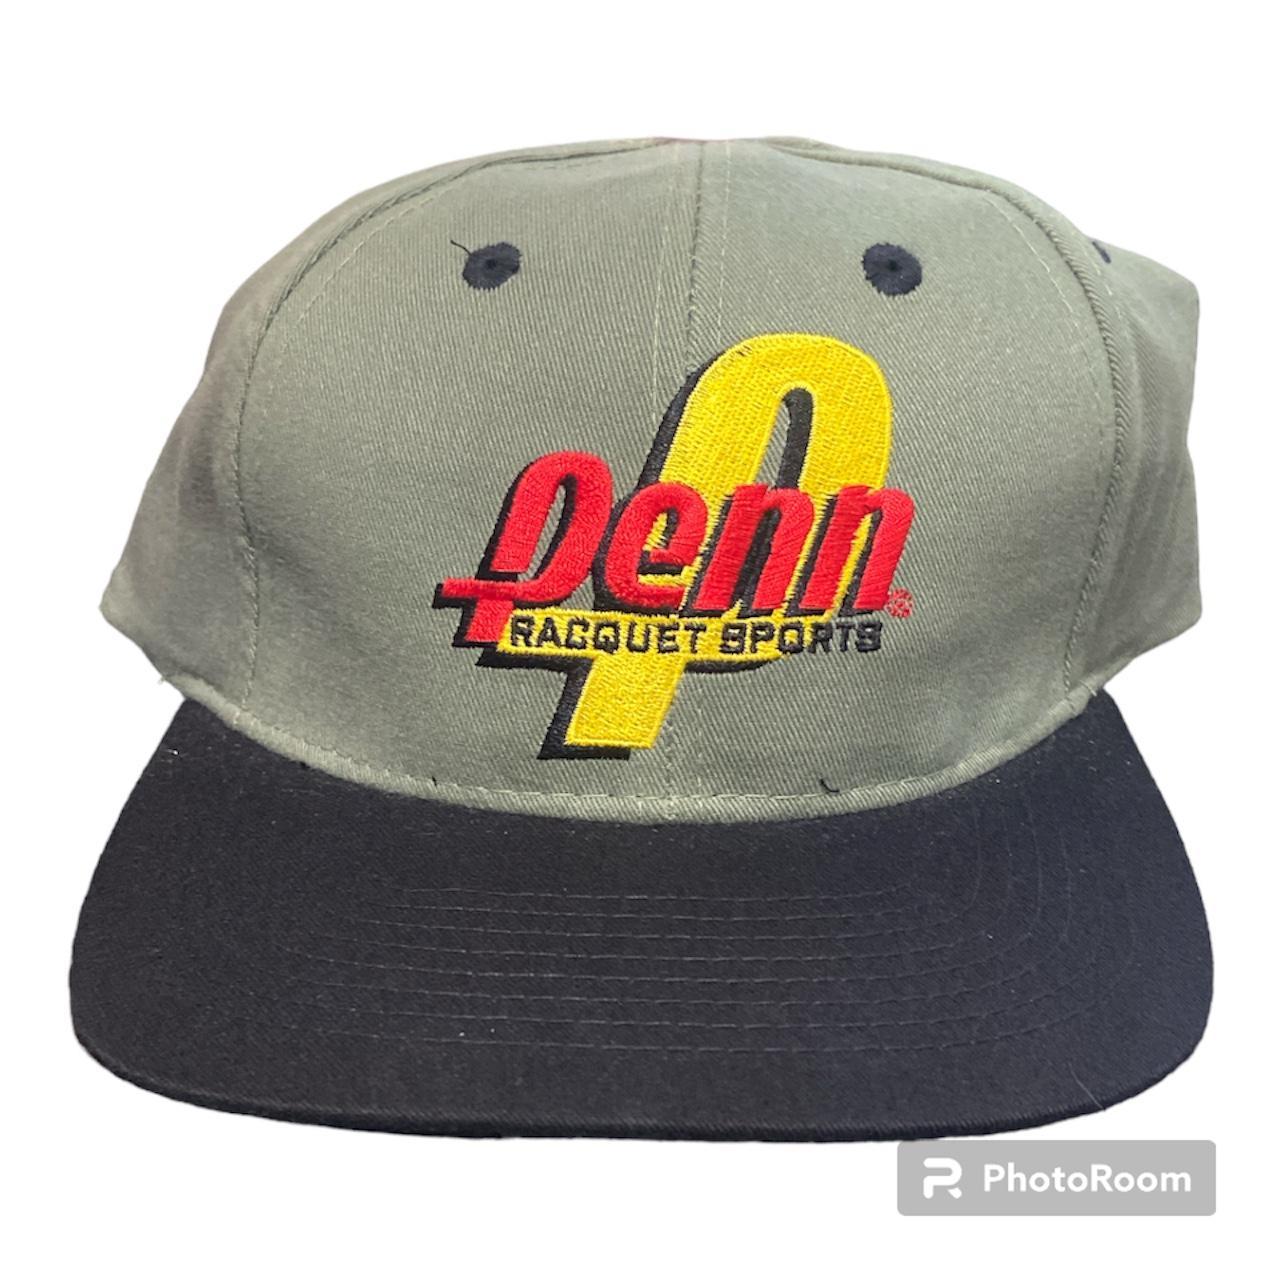 Brand new vintage Penn hat! , Never worn , Got it in a